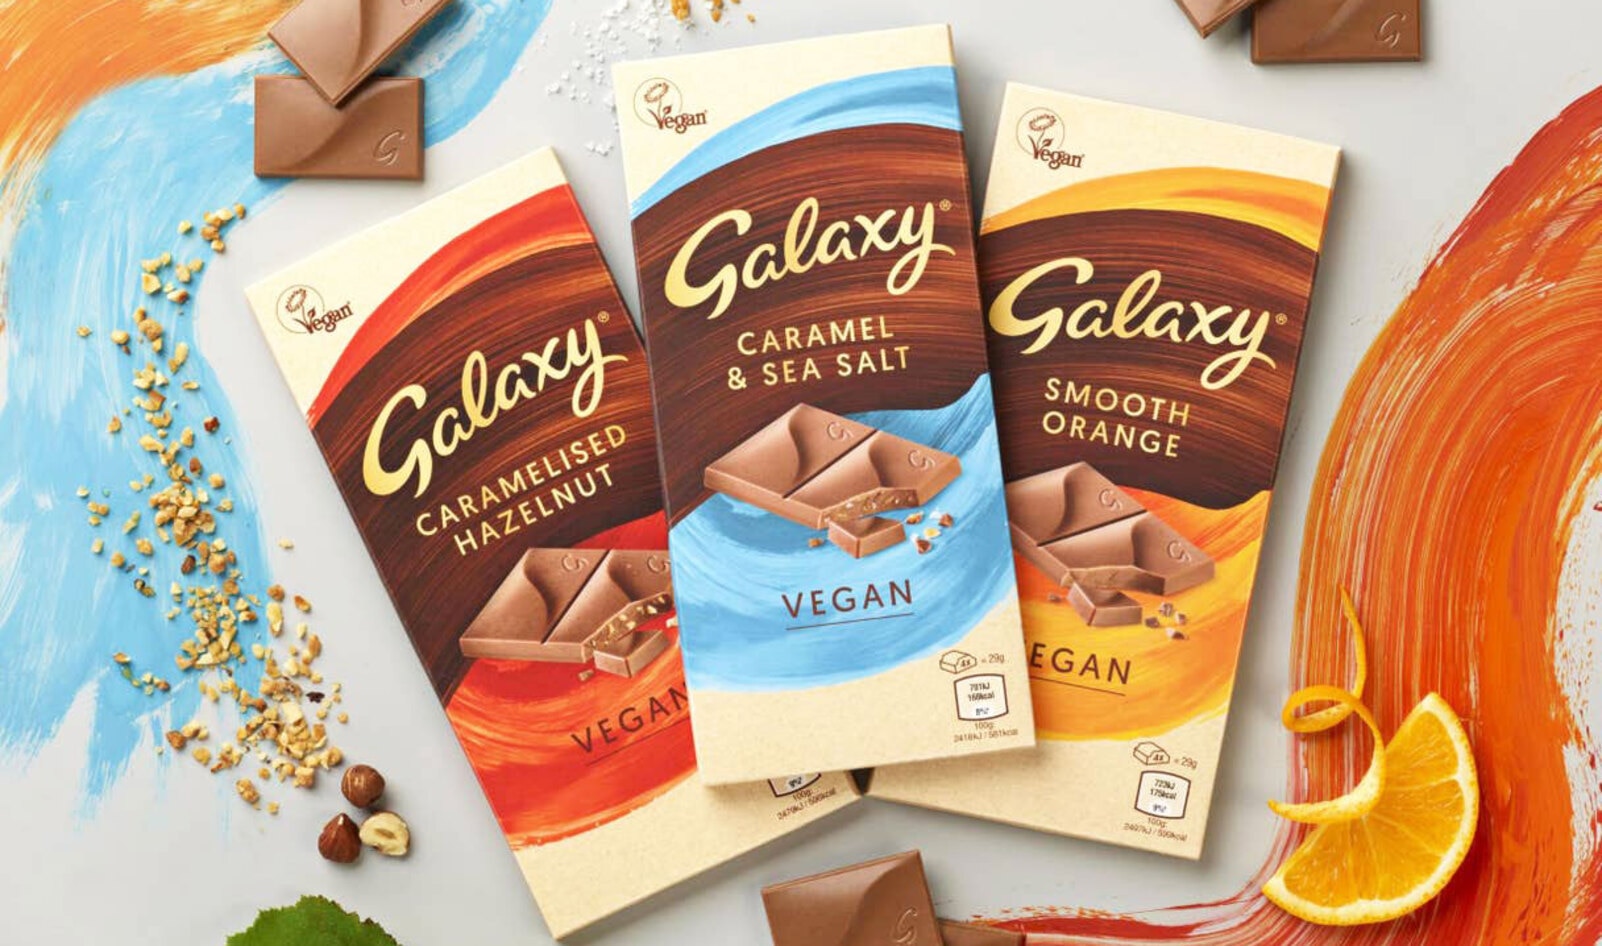 Mars to Launch Its First Vegan Milk Chocolate Bar in UK